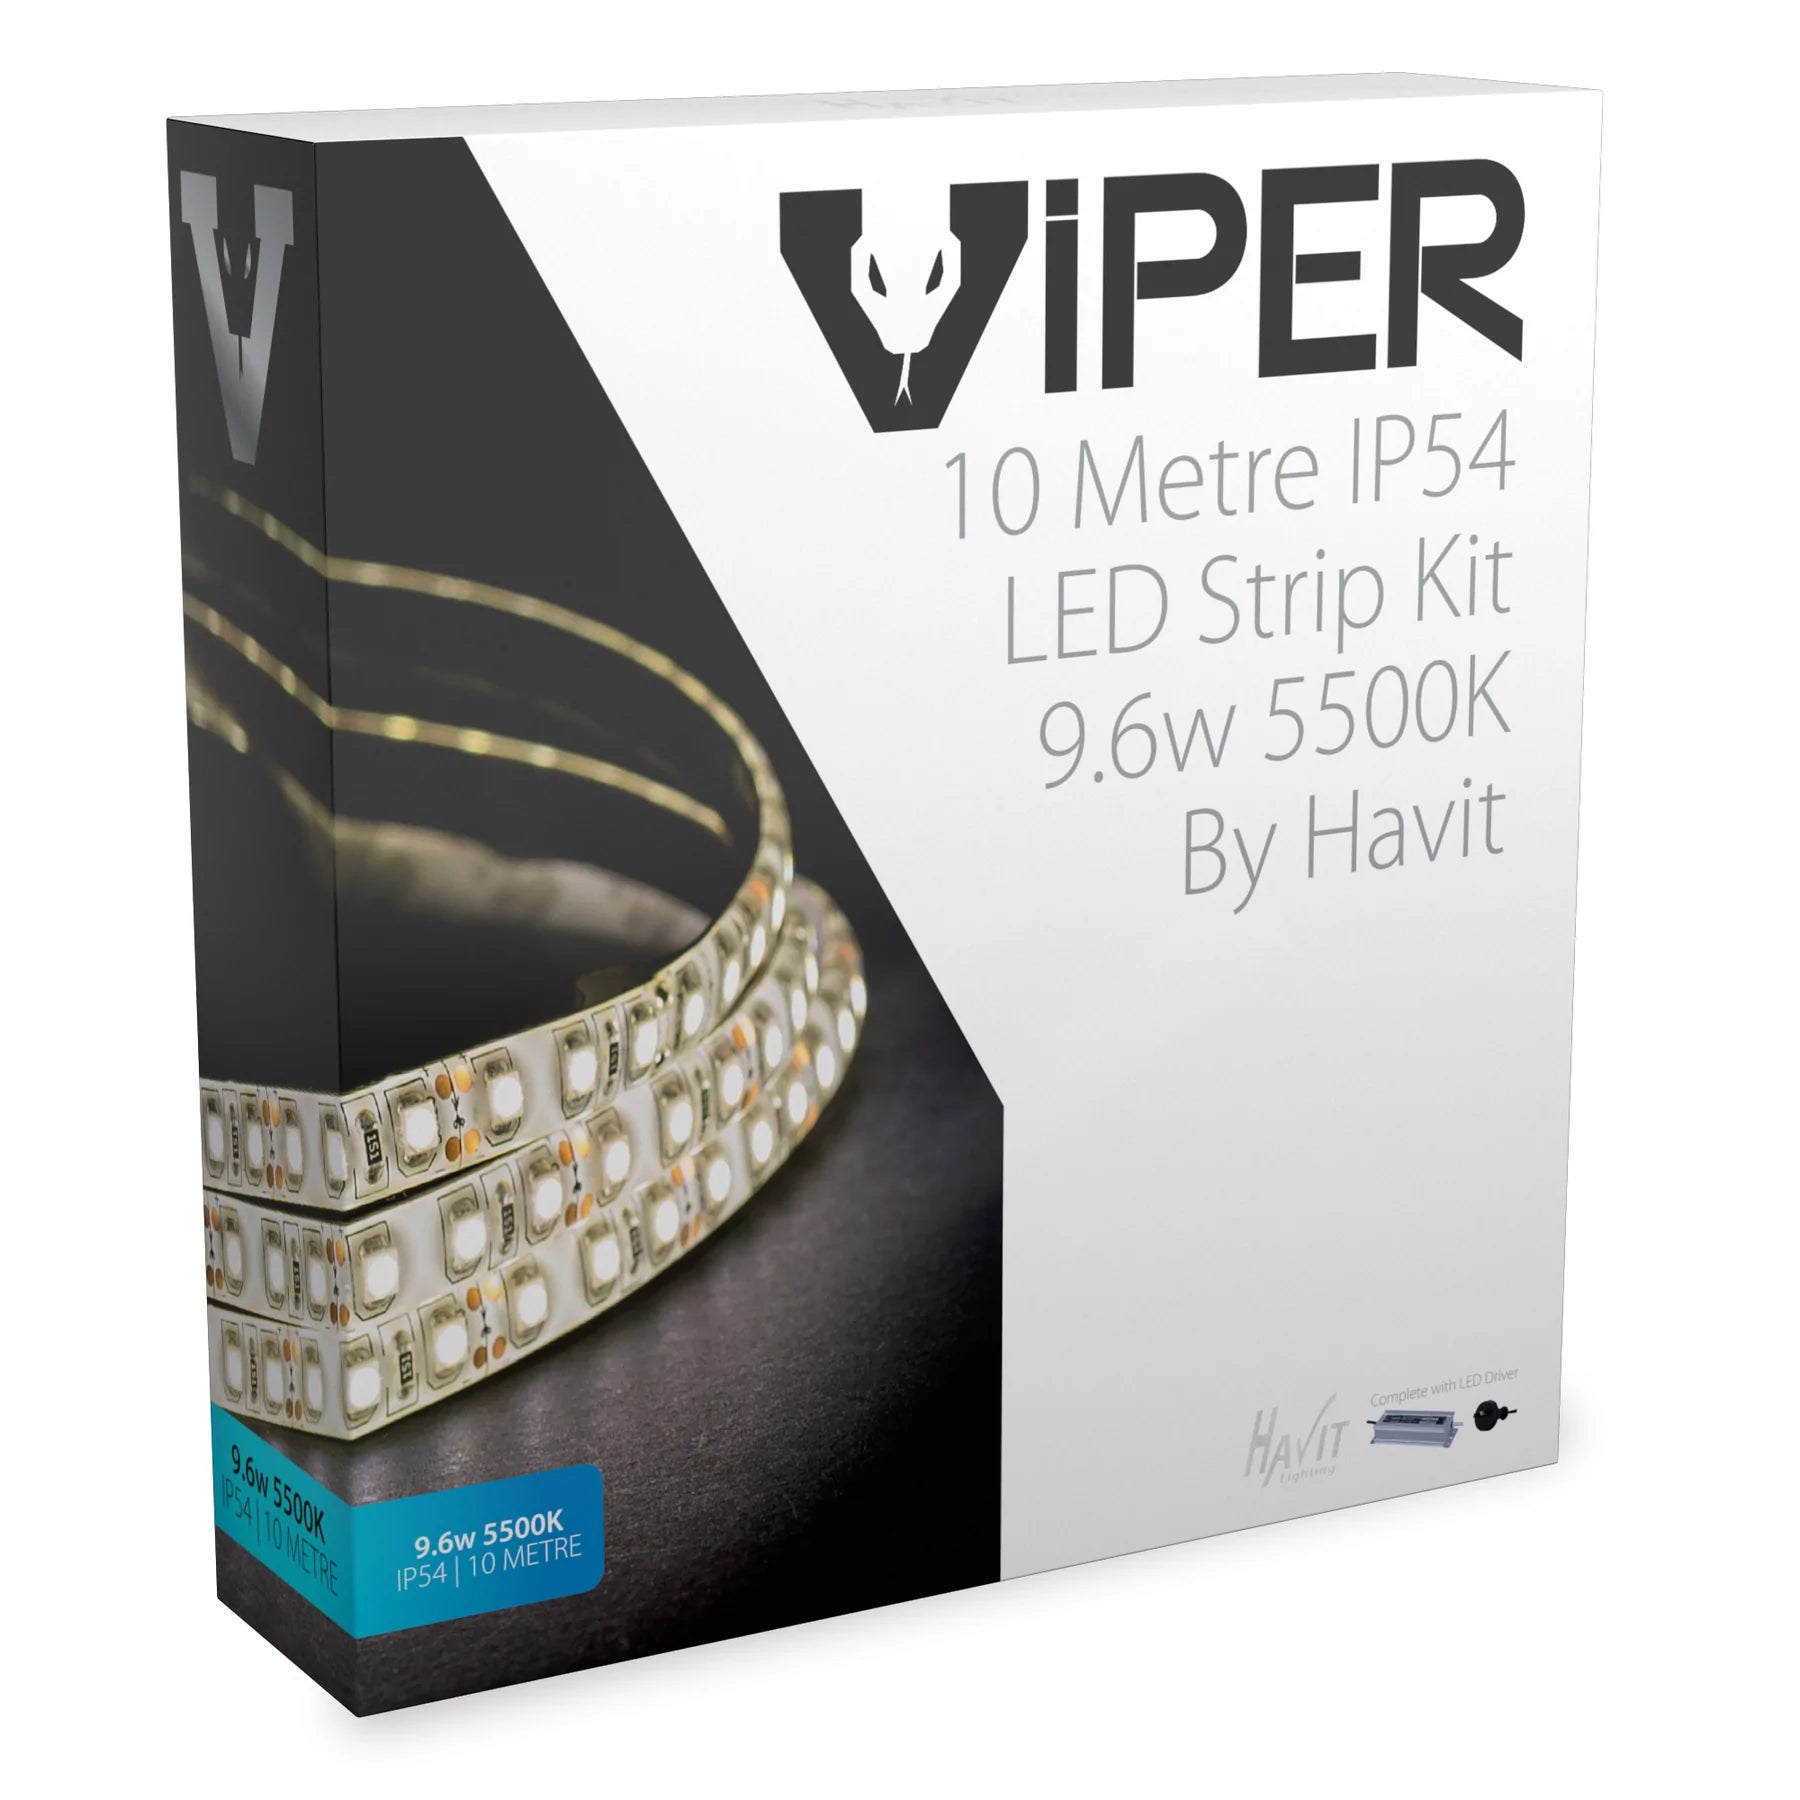 Havit VPR9744IP54-120-10M VIPER 9.6w 10m LED Strip kit 5500k